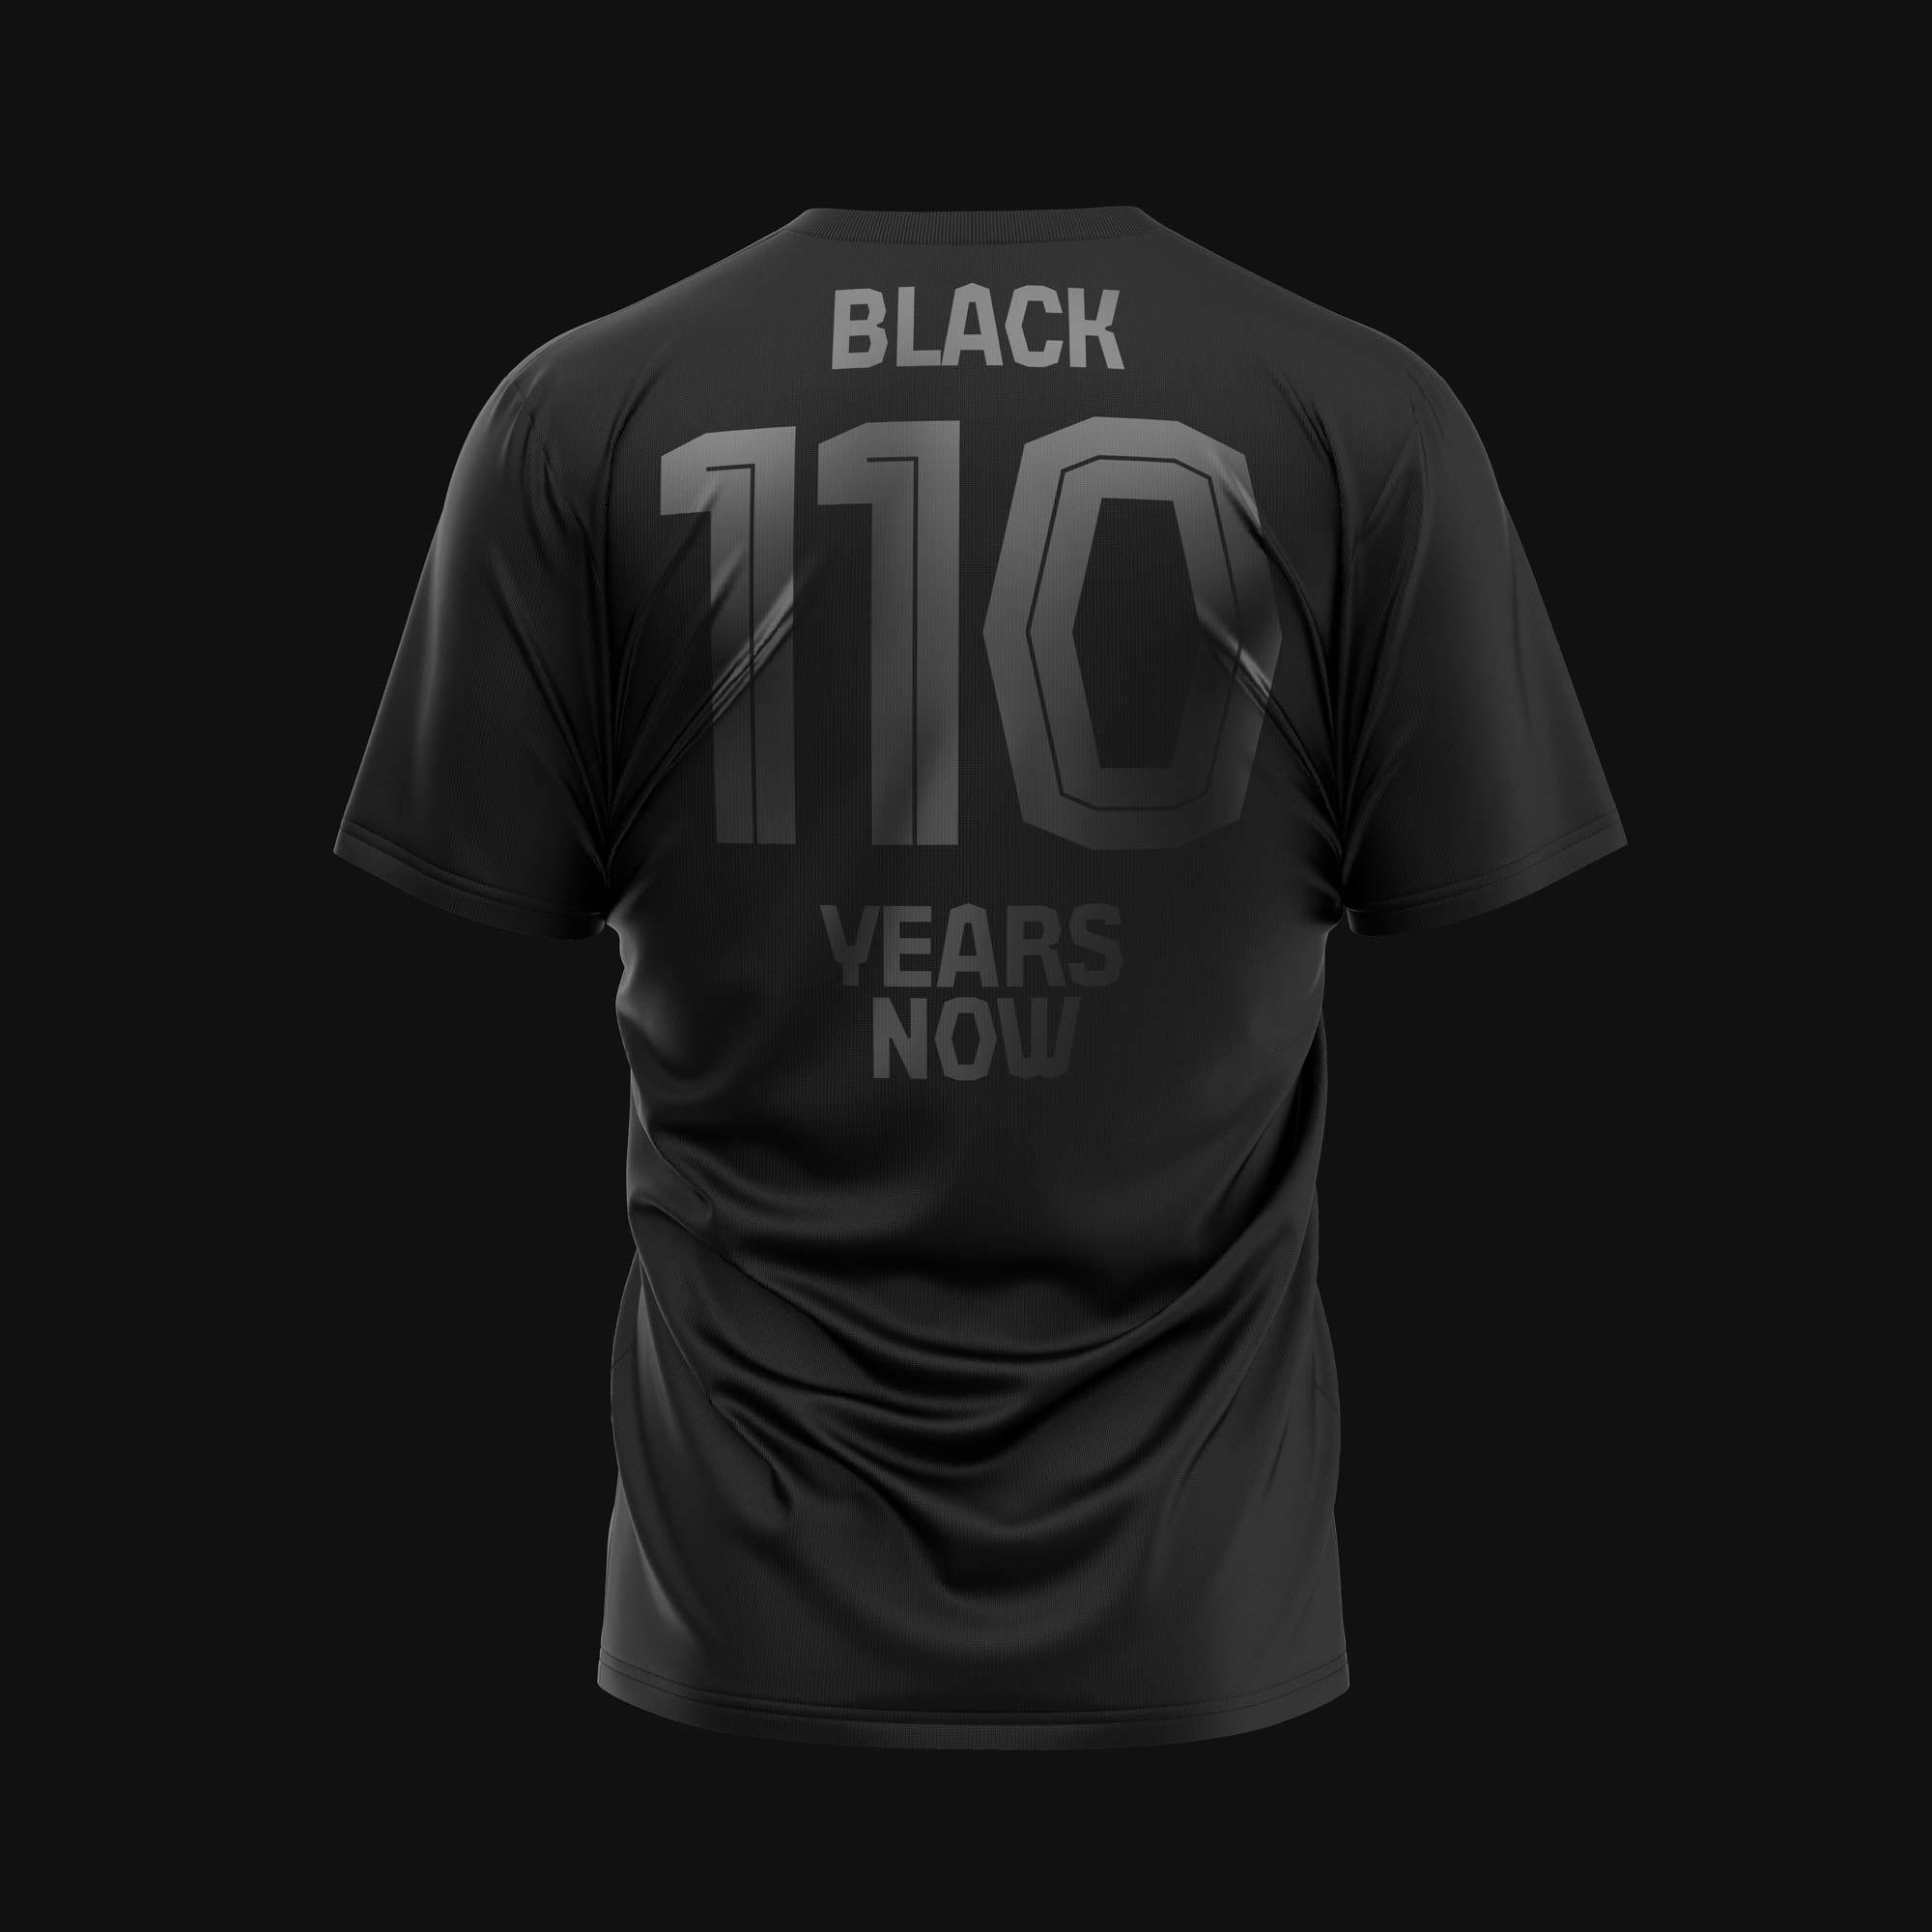 Version black on black and slogan